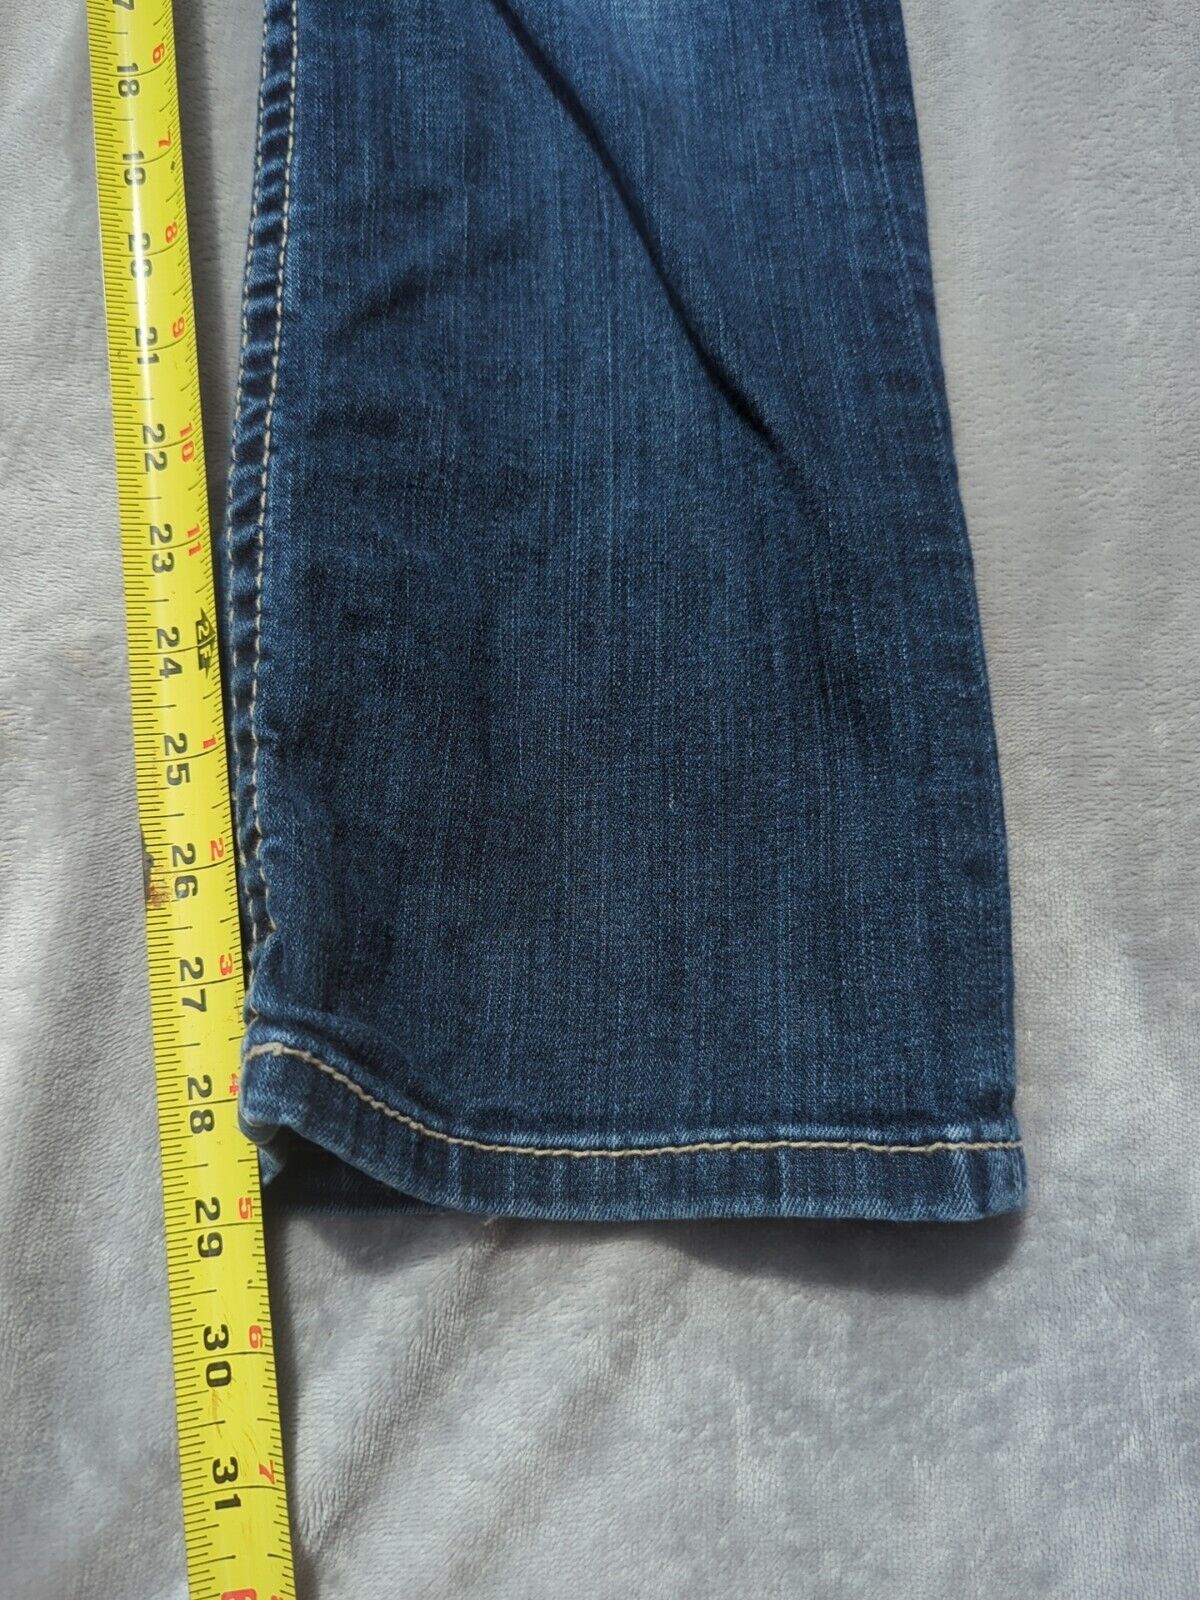 Buckle BKE Jeans Womens 29R Harper Blue Denim Thi… - image 4